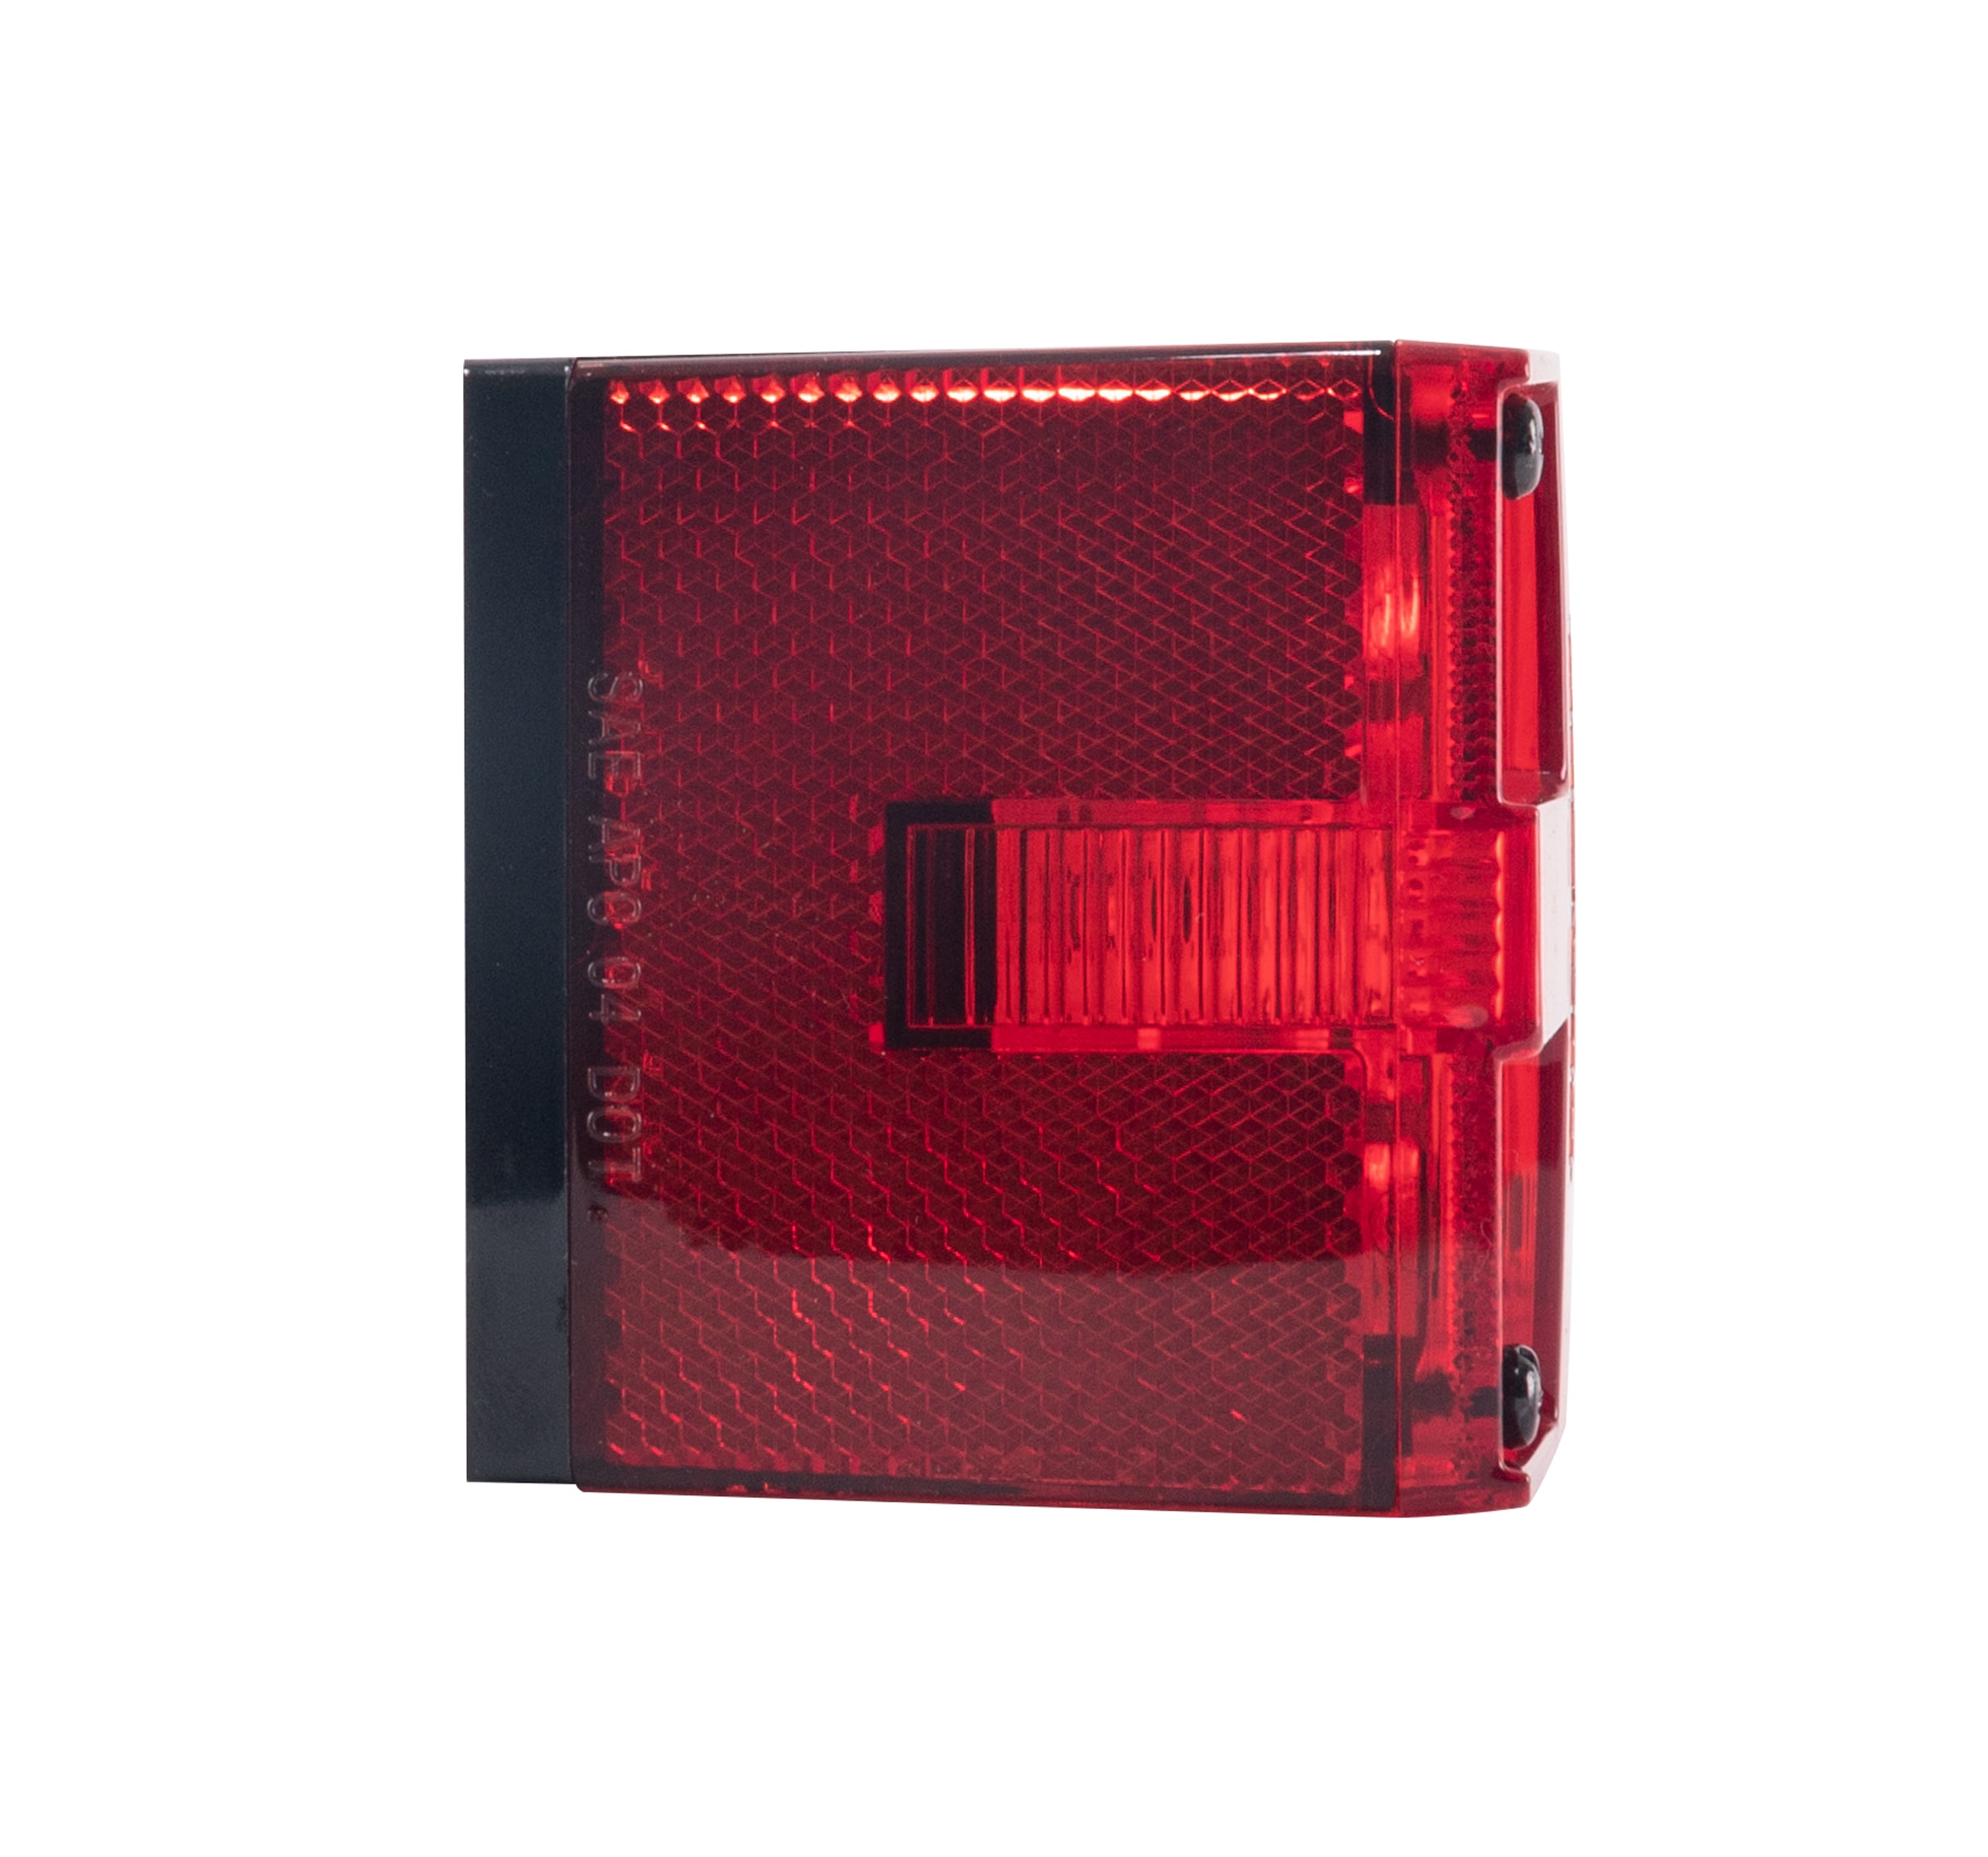 Pro Trailer LED Lighting Kit - Red by Th Marine (LEDBW-111-1-R-DP)